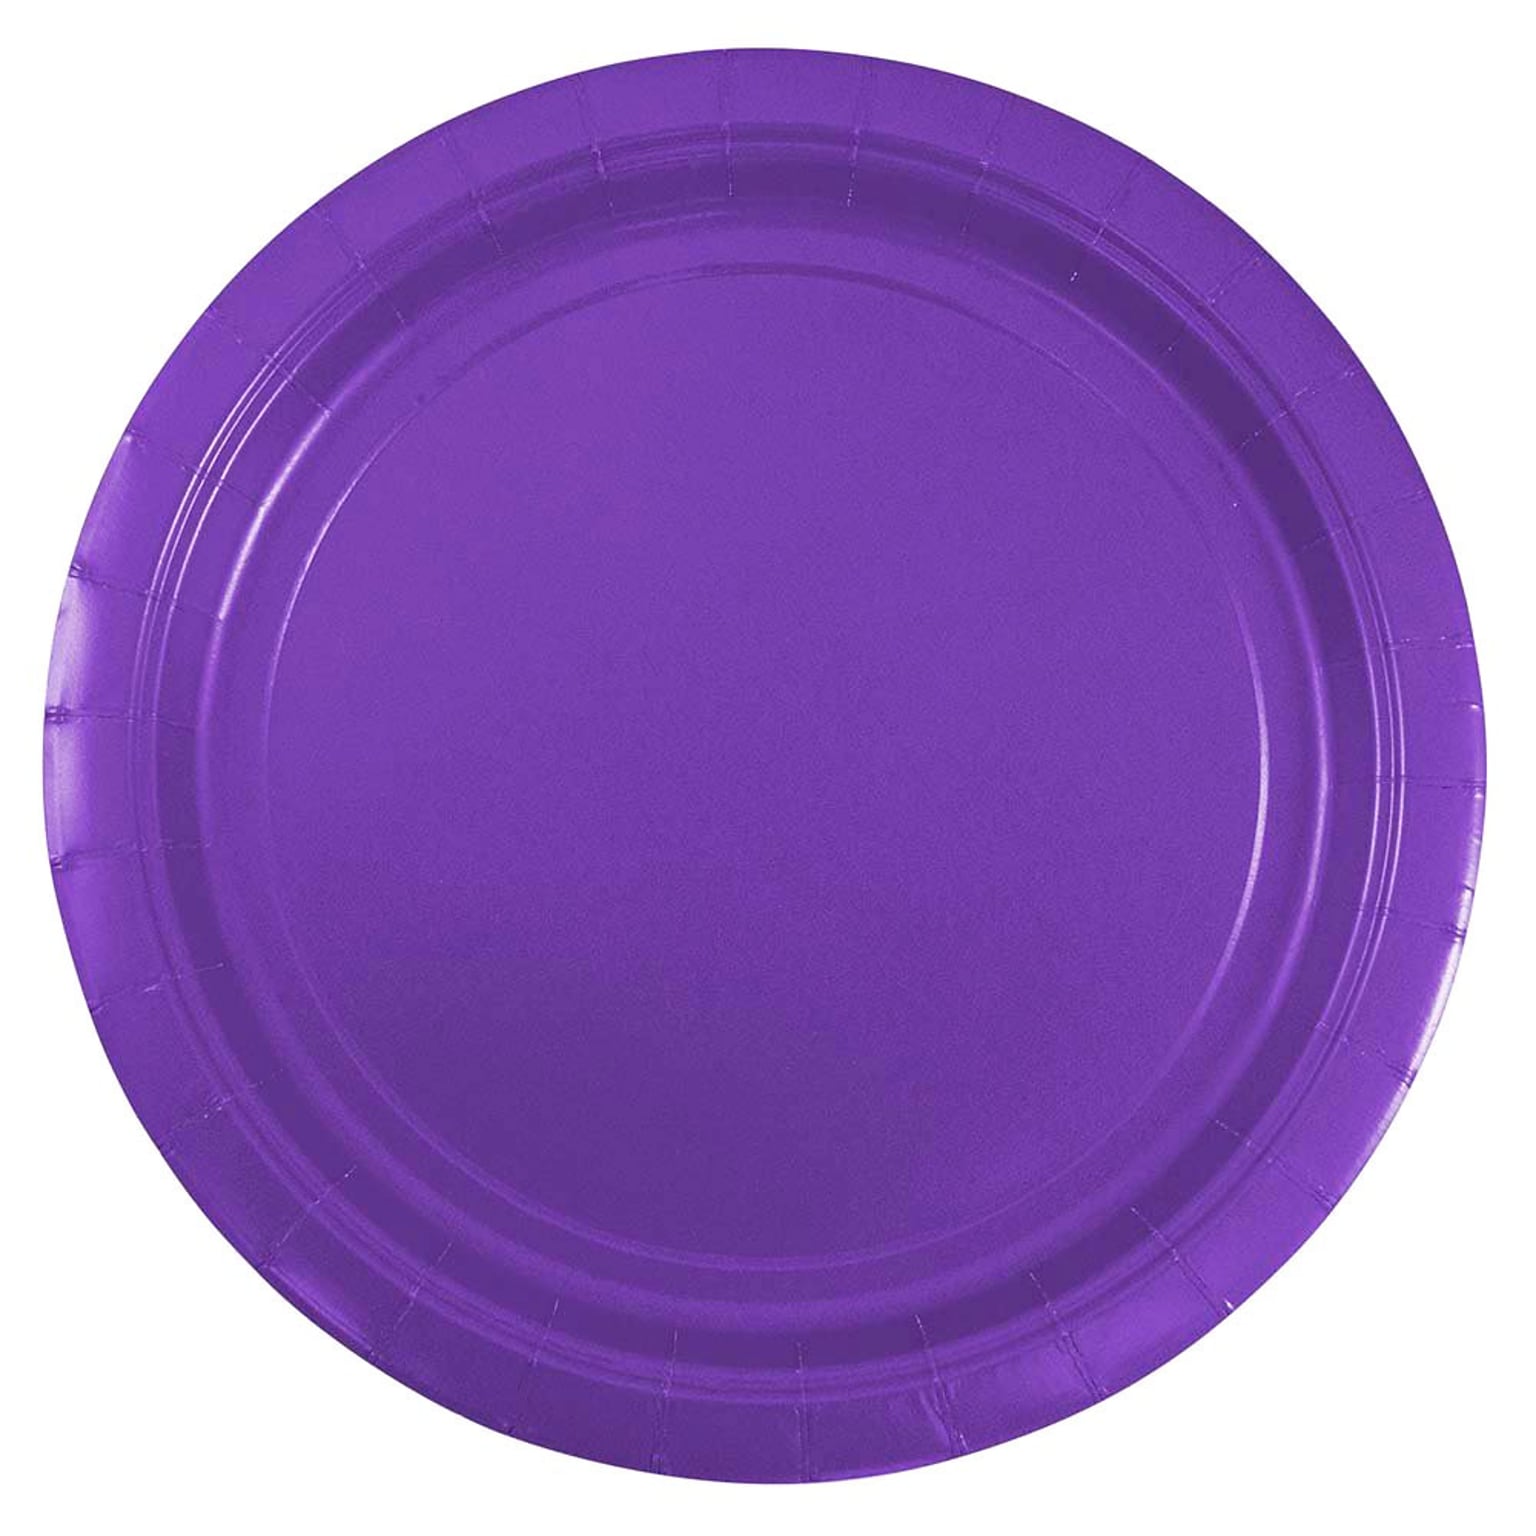 JAM PAPER Round Paper Party Plates, Medium, 9 Inch, Purple, 50/pack